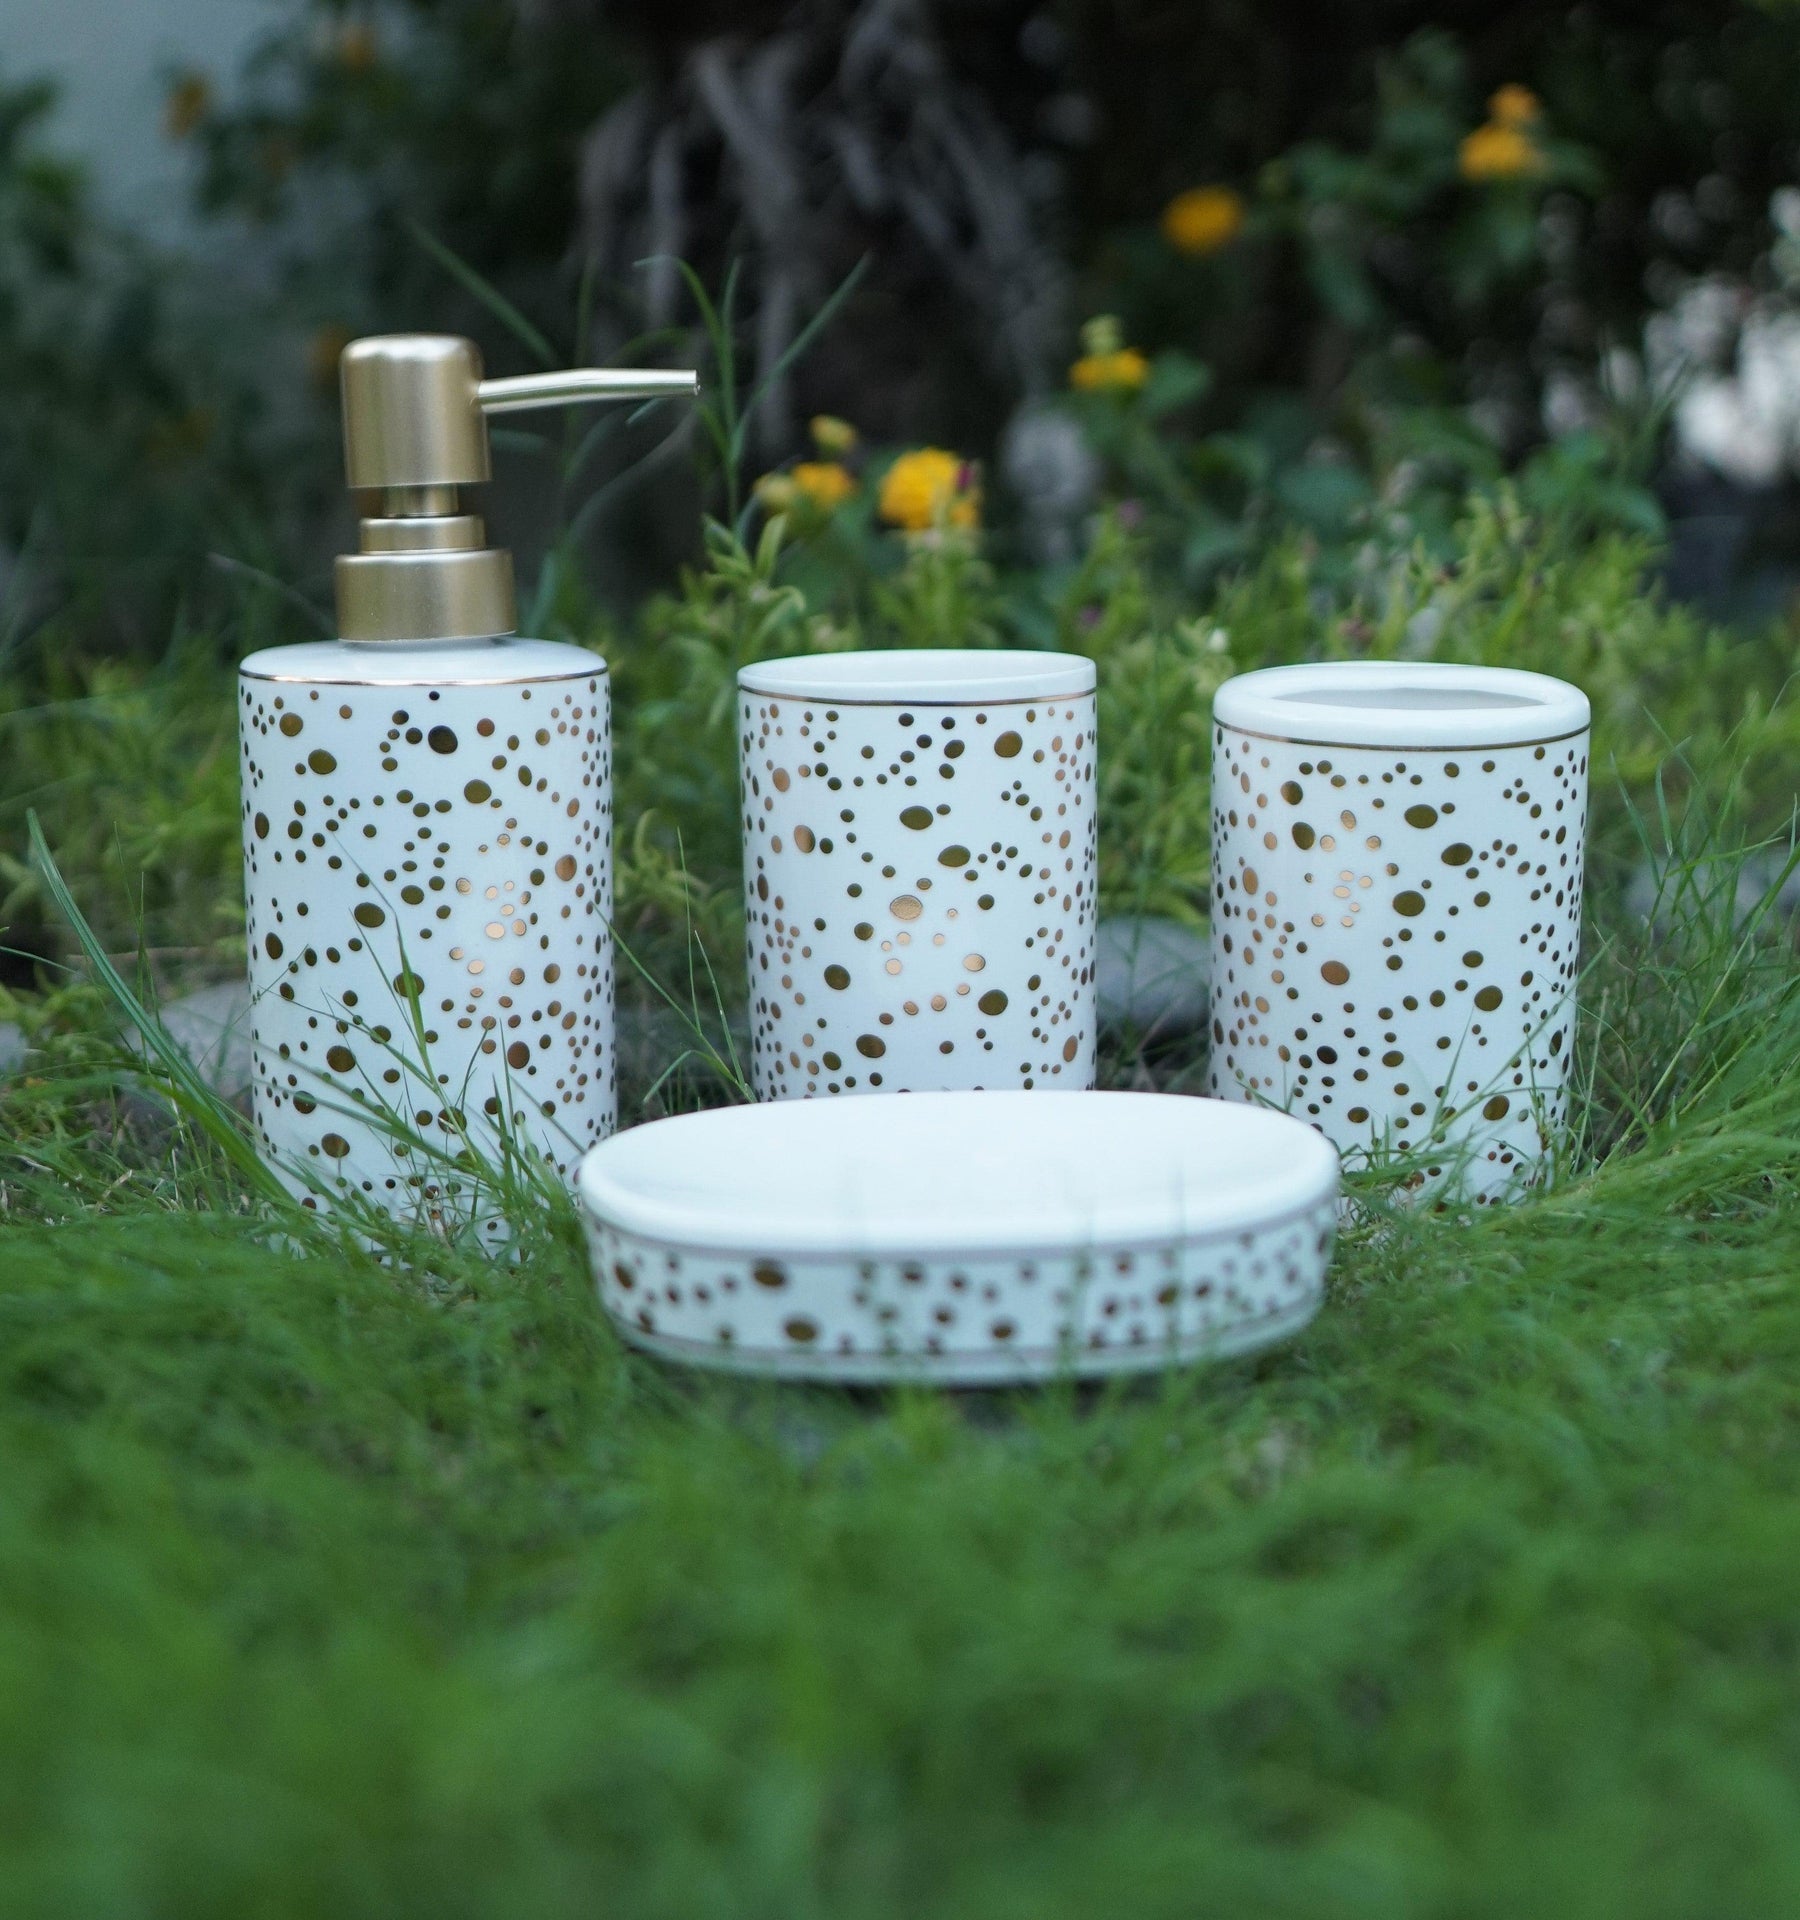 Ceramic Bathroom Set - Gold Dotted - White